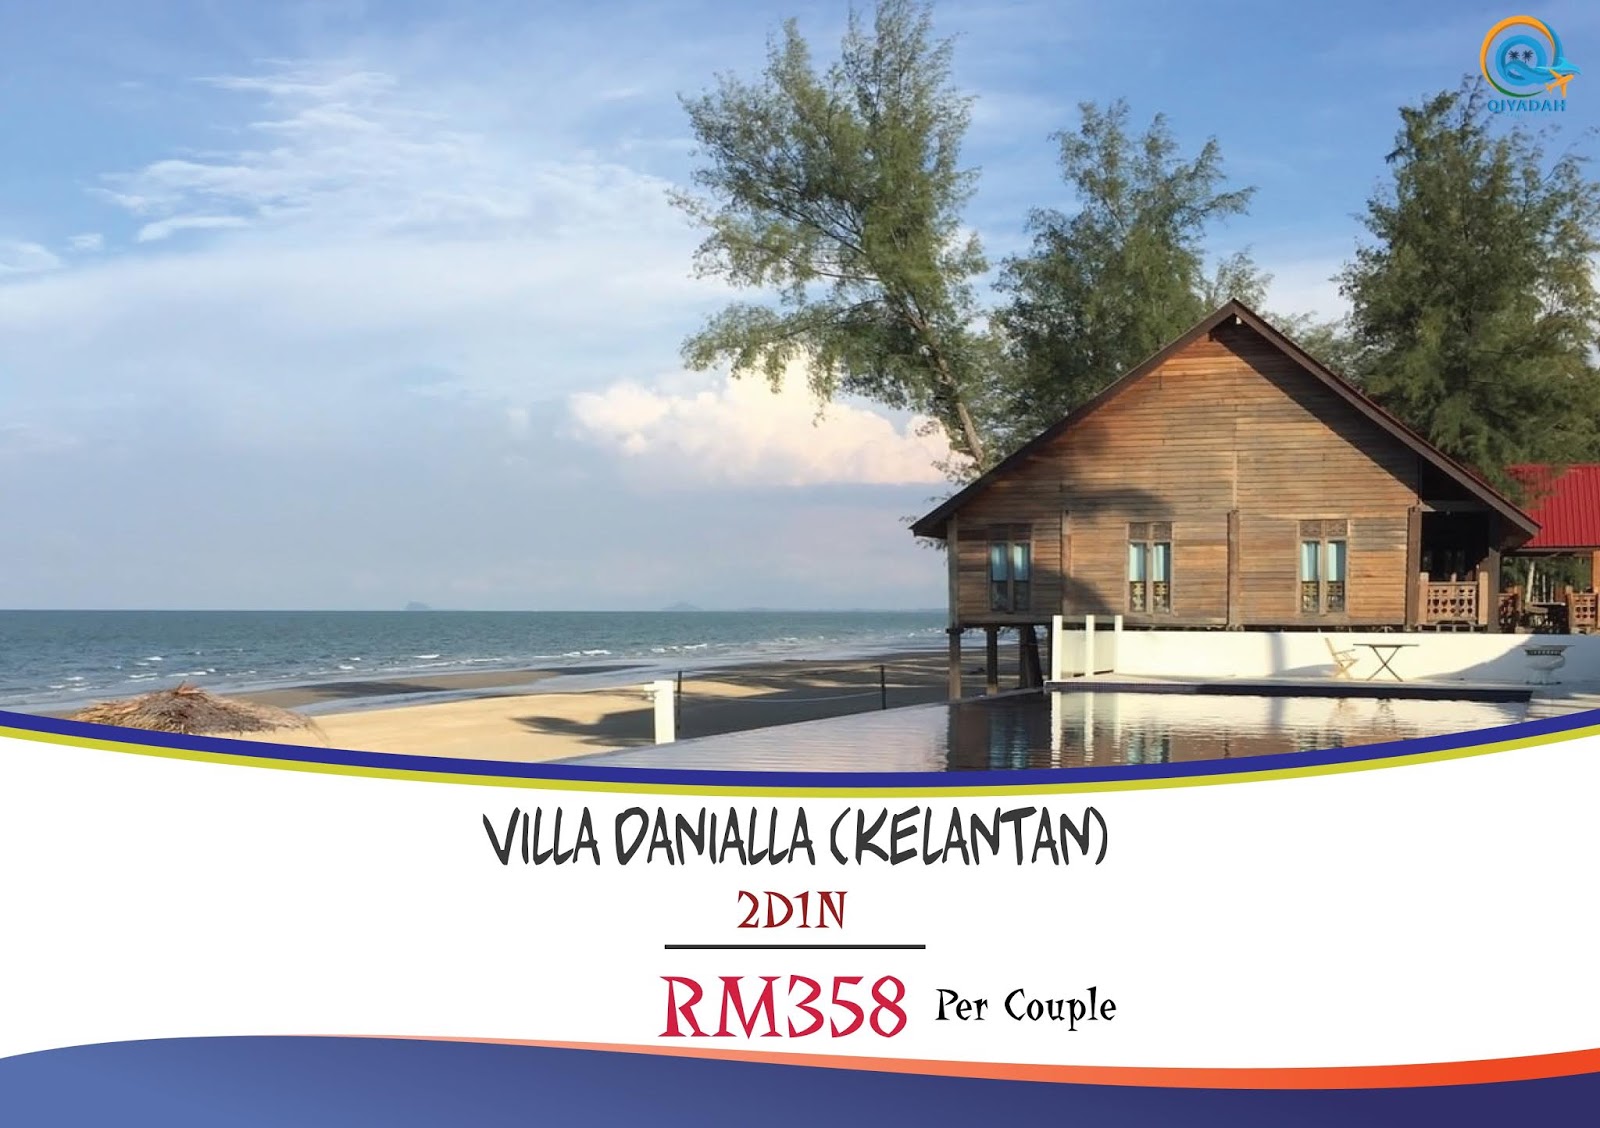 Villa danialla beach resort